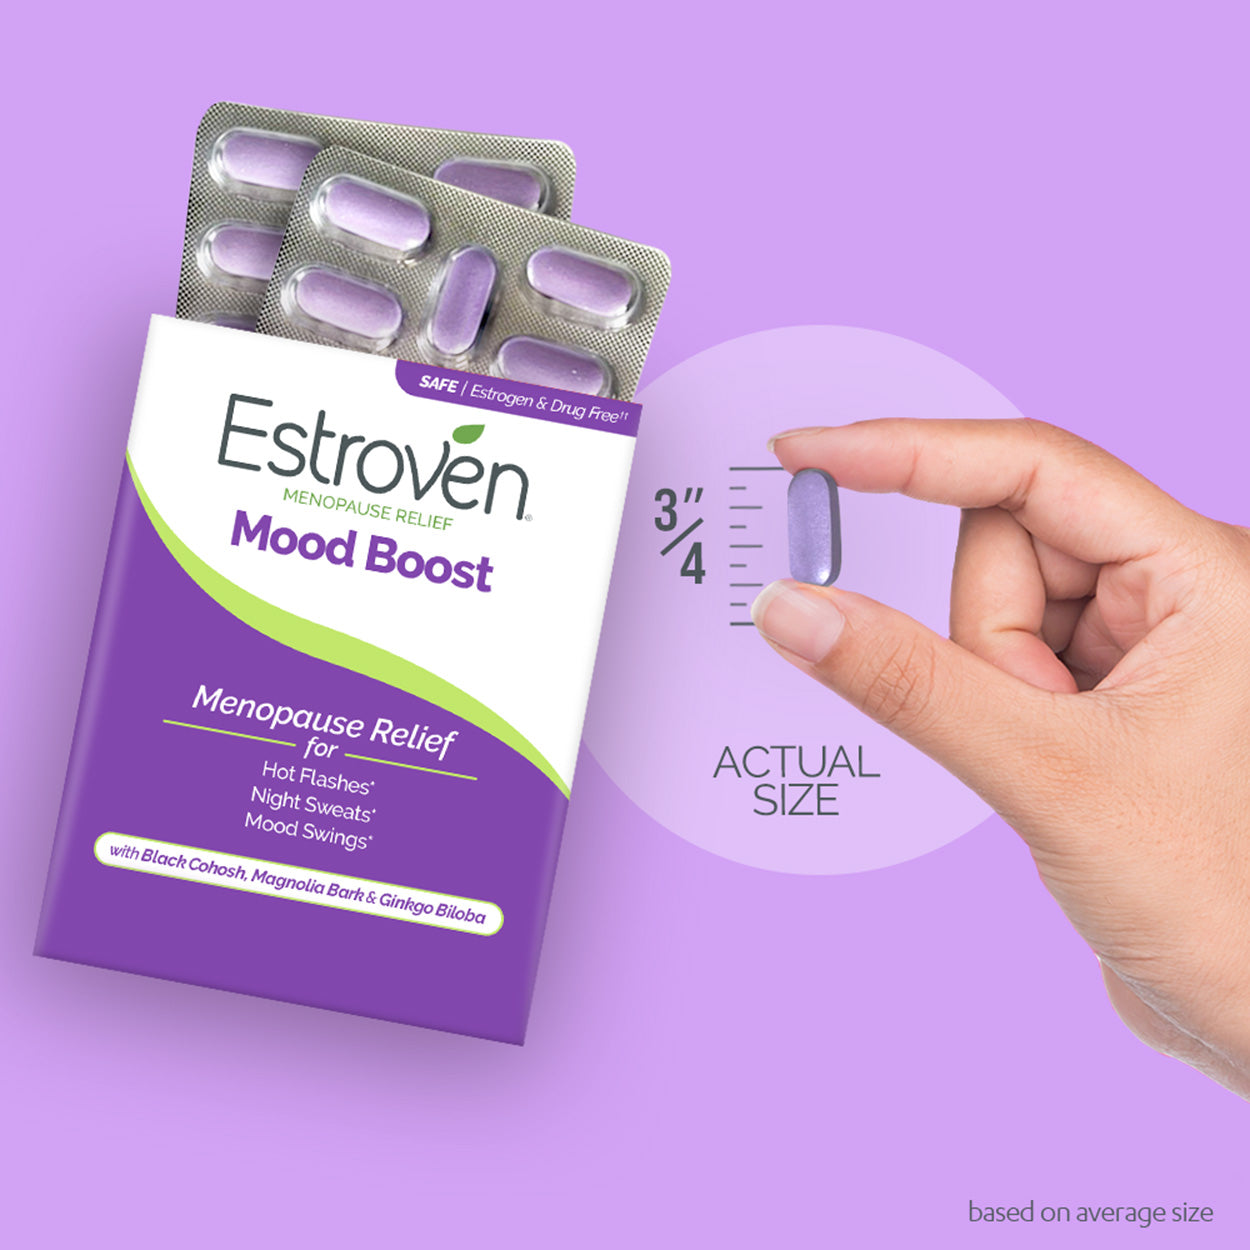 Estroven Mood Boost capsule size thumbnail